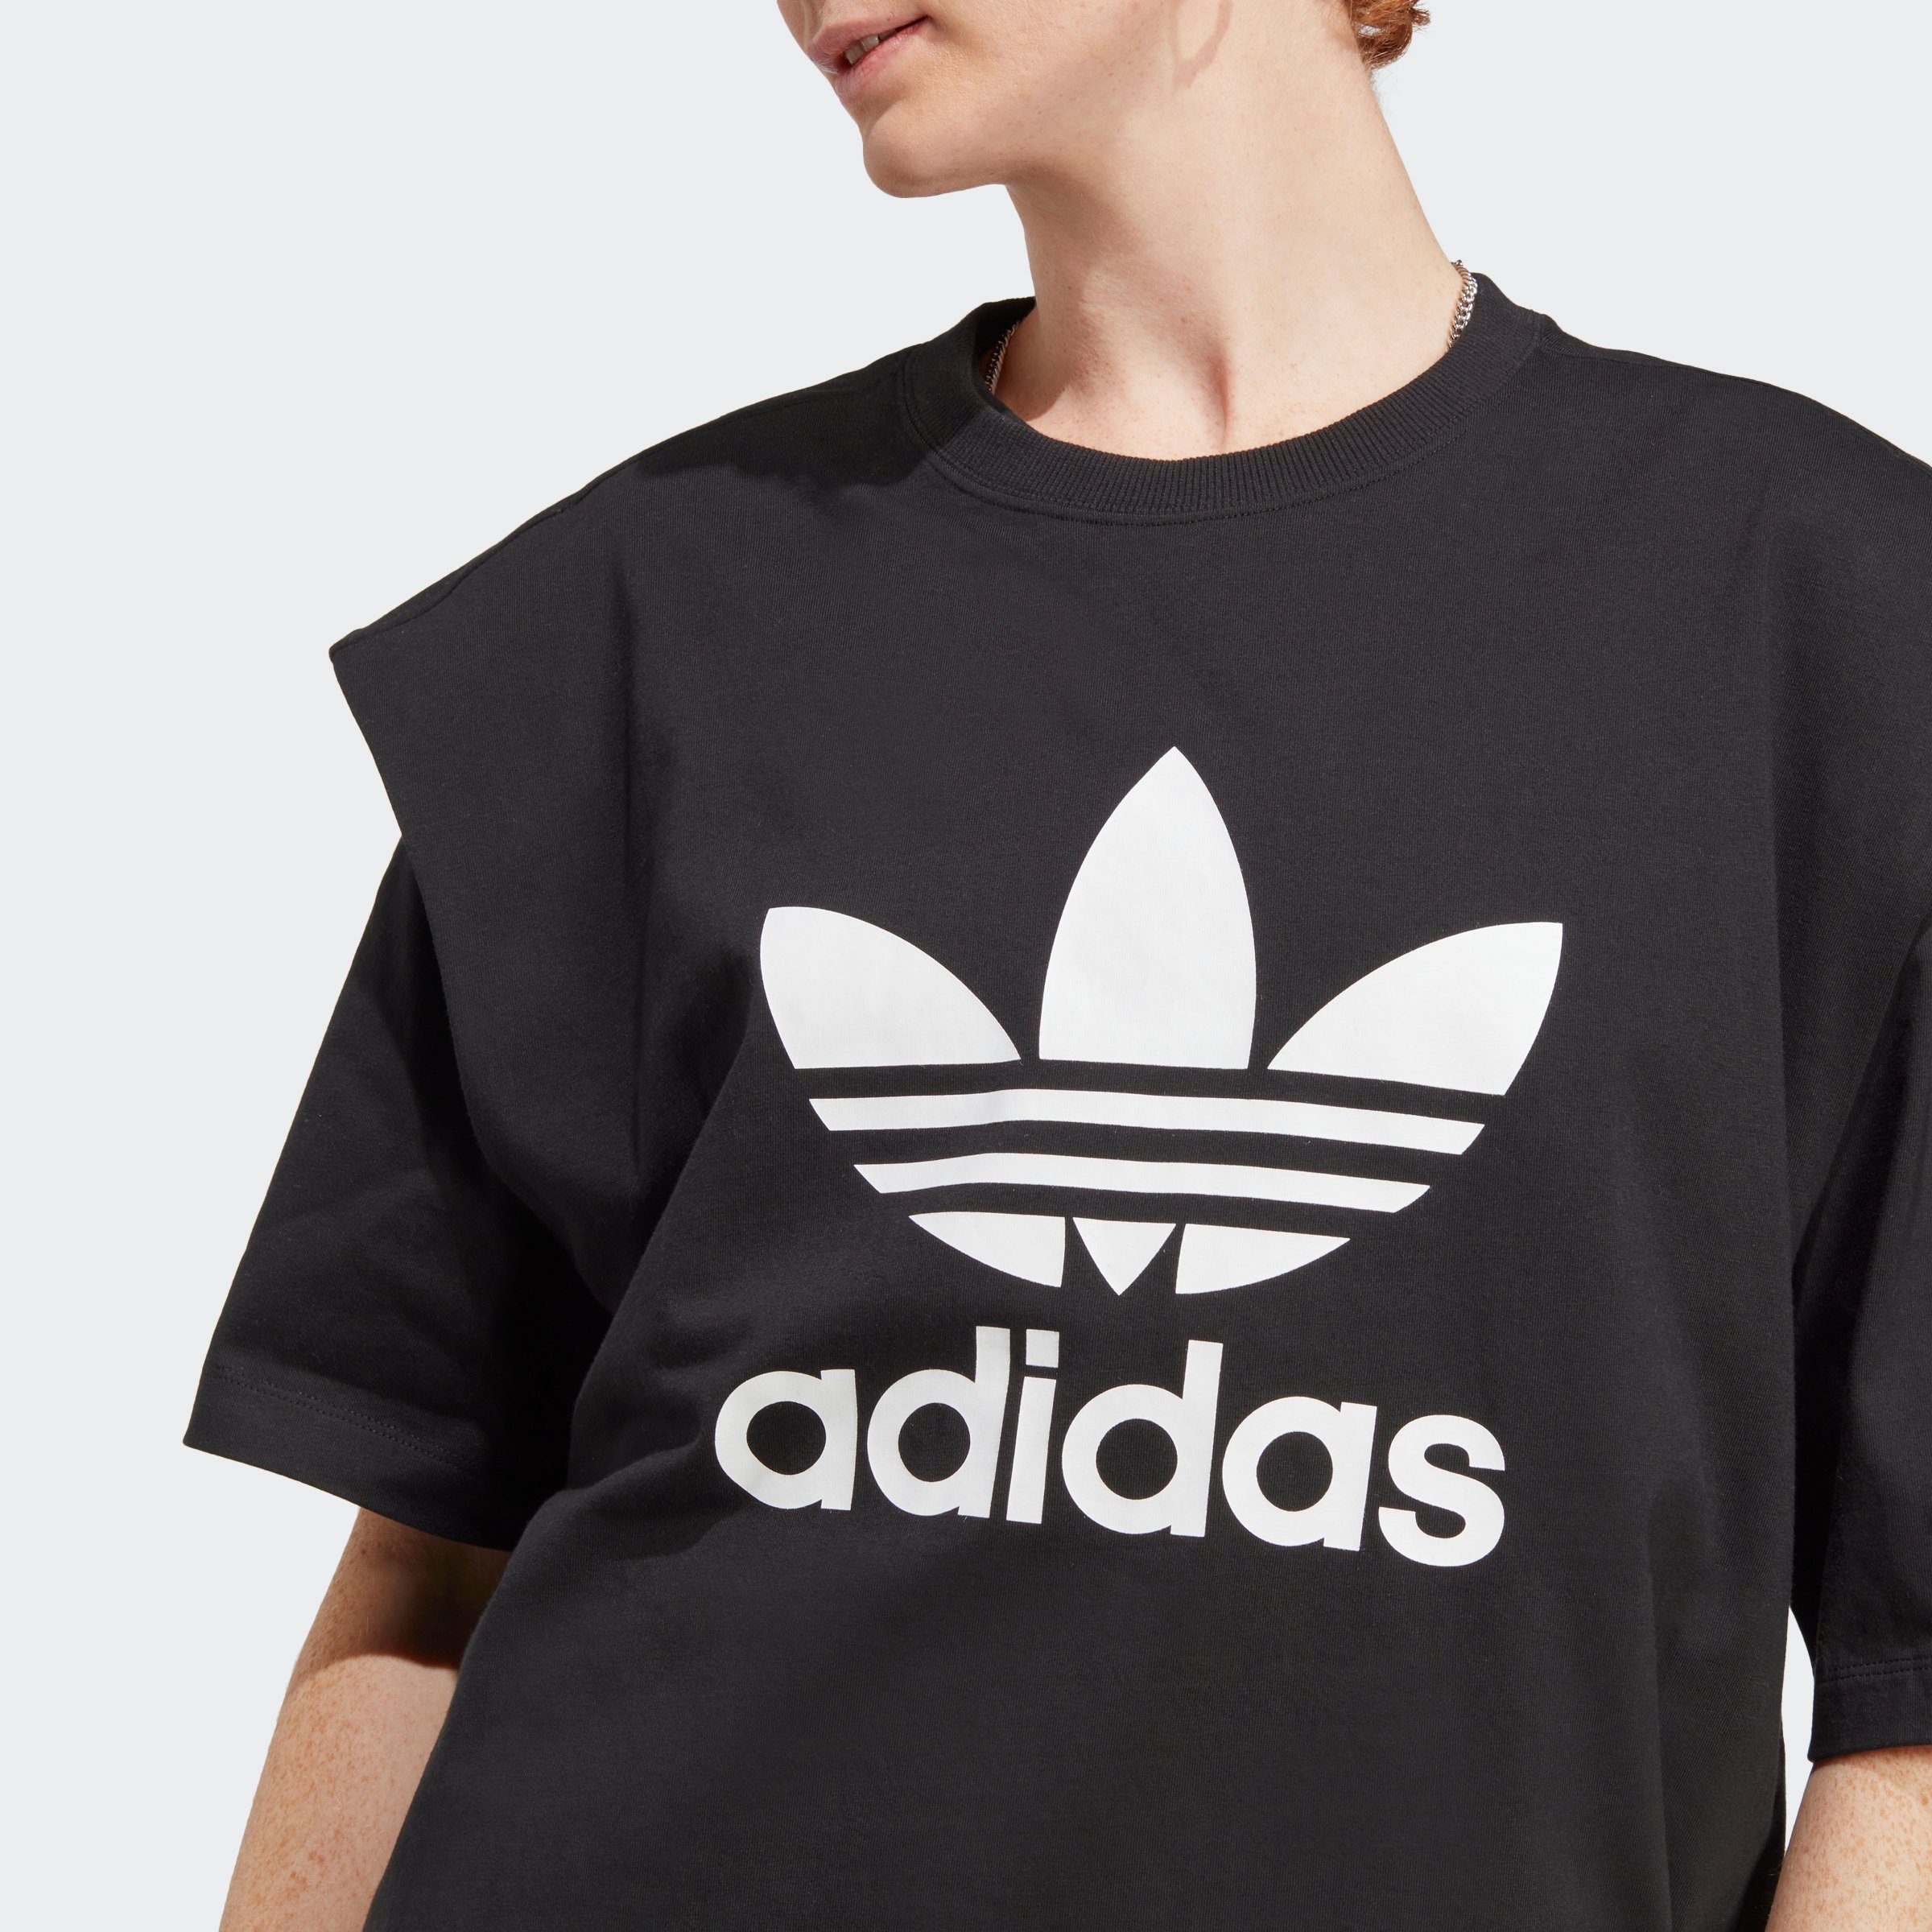 adidas Originals T-Shirt ALWAYS ORIGINAL Black